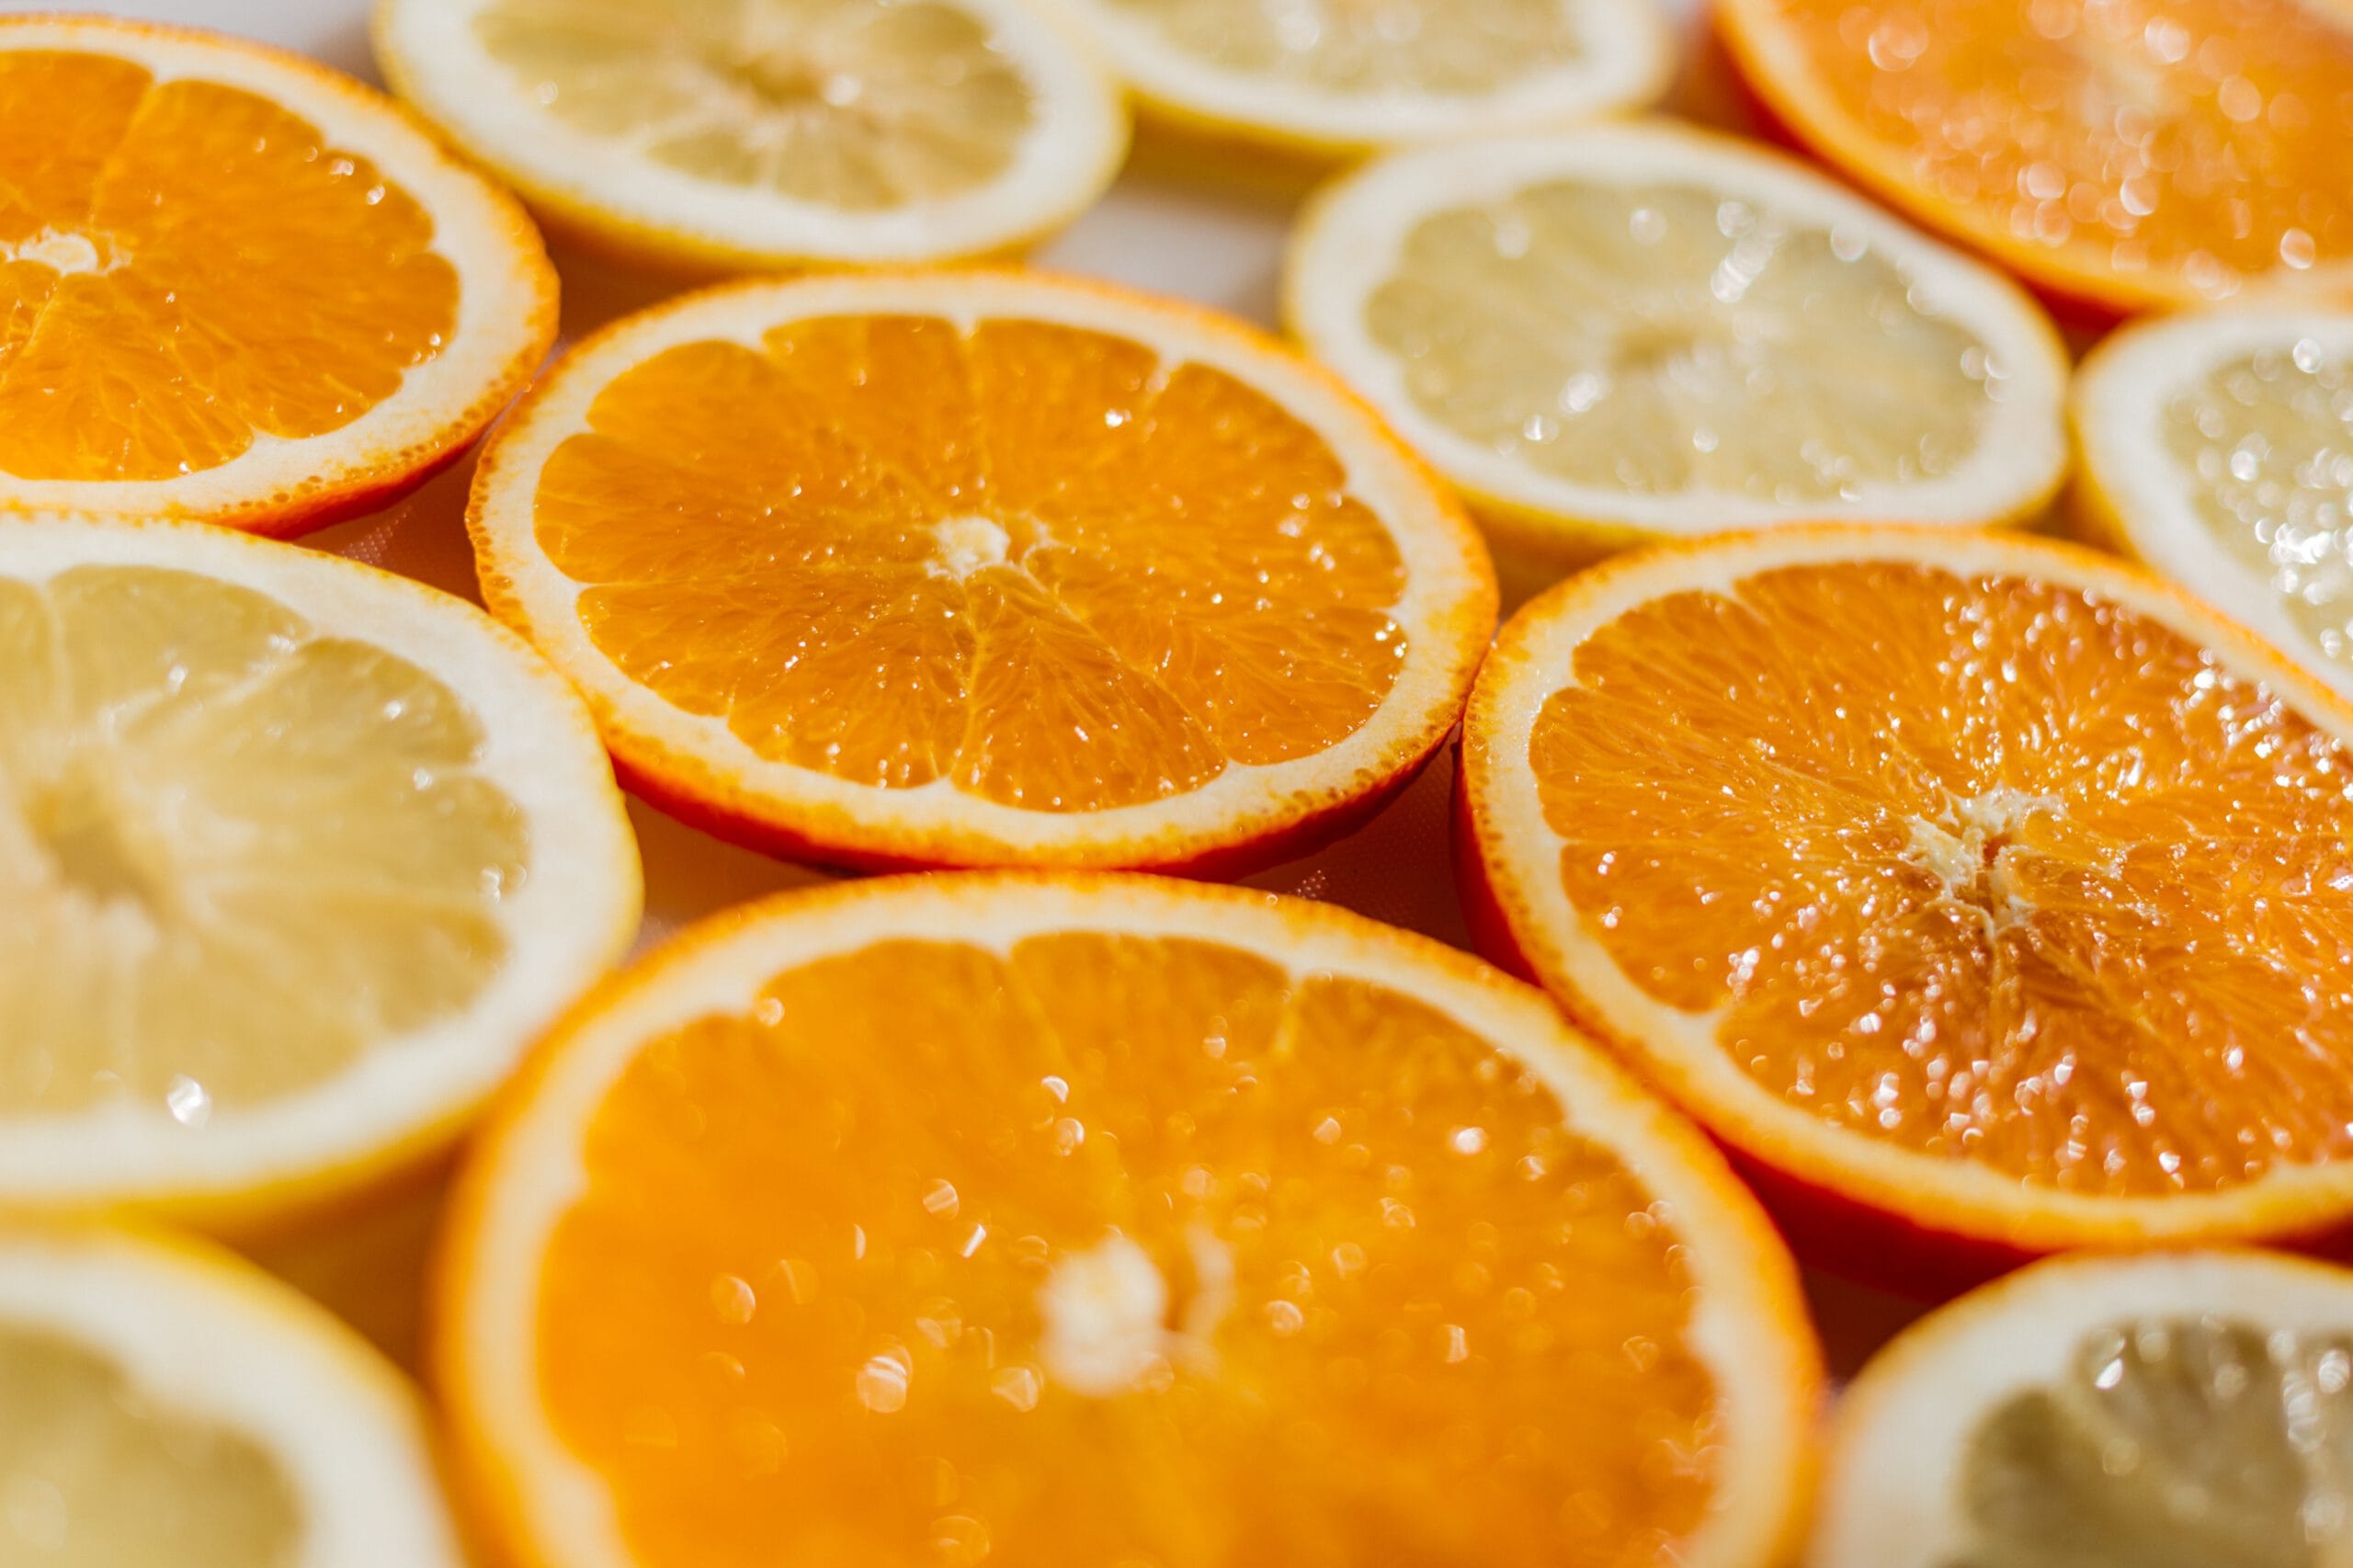 orange-and-lemon-slices